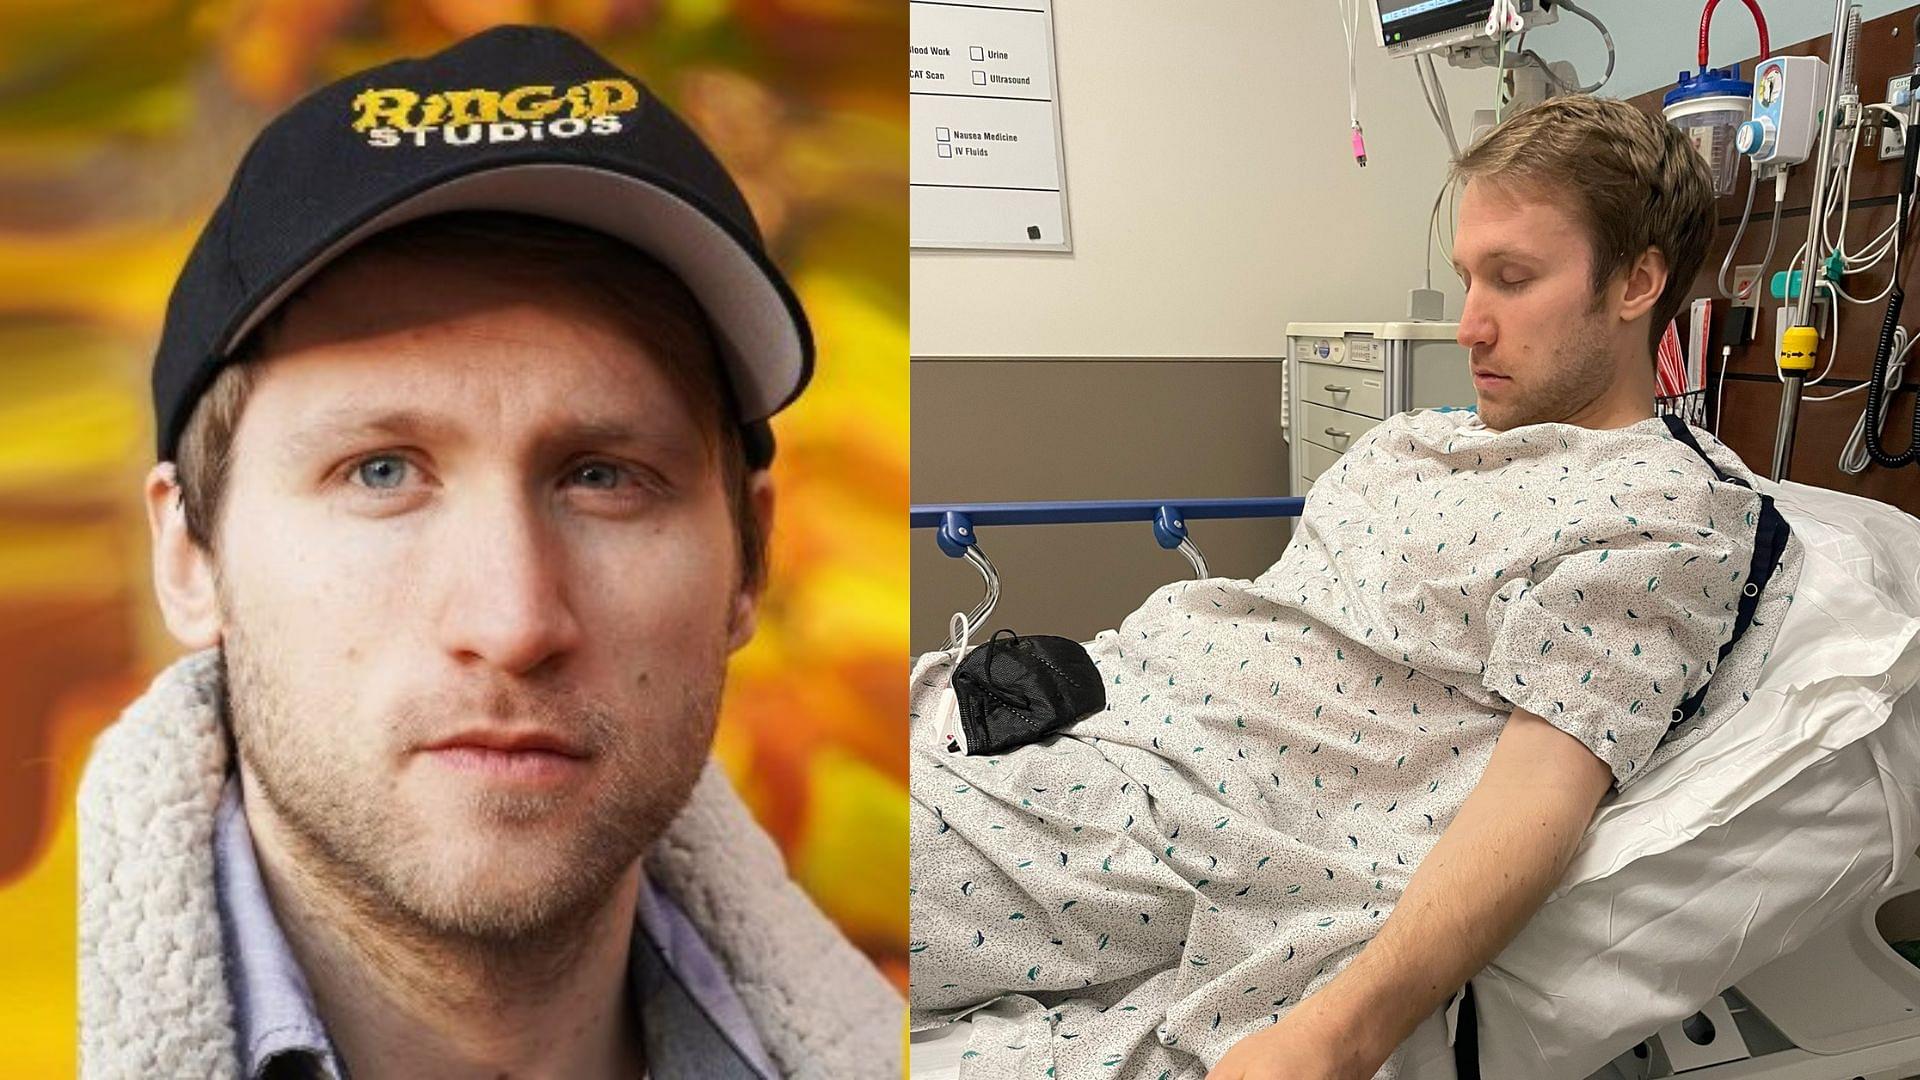 McJuggerNuggets posts an health update mentioning recent hospitalization